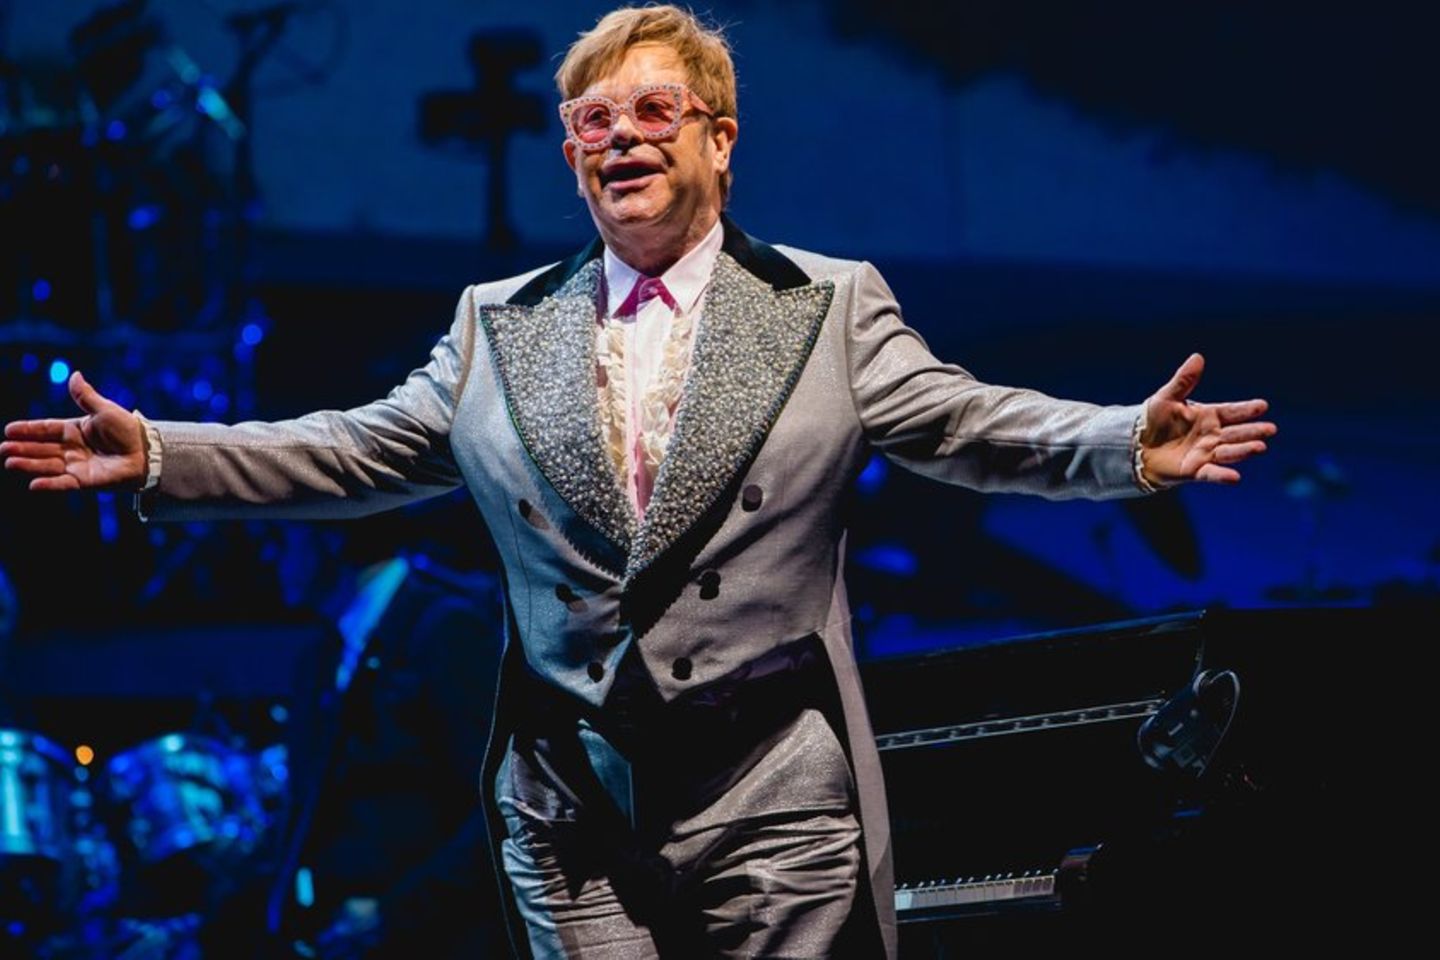 Elton John: Hochkarätige Special Guests bei Glastonbury Festival